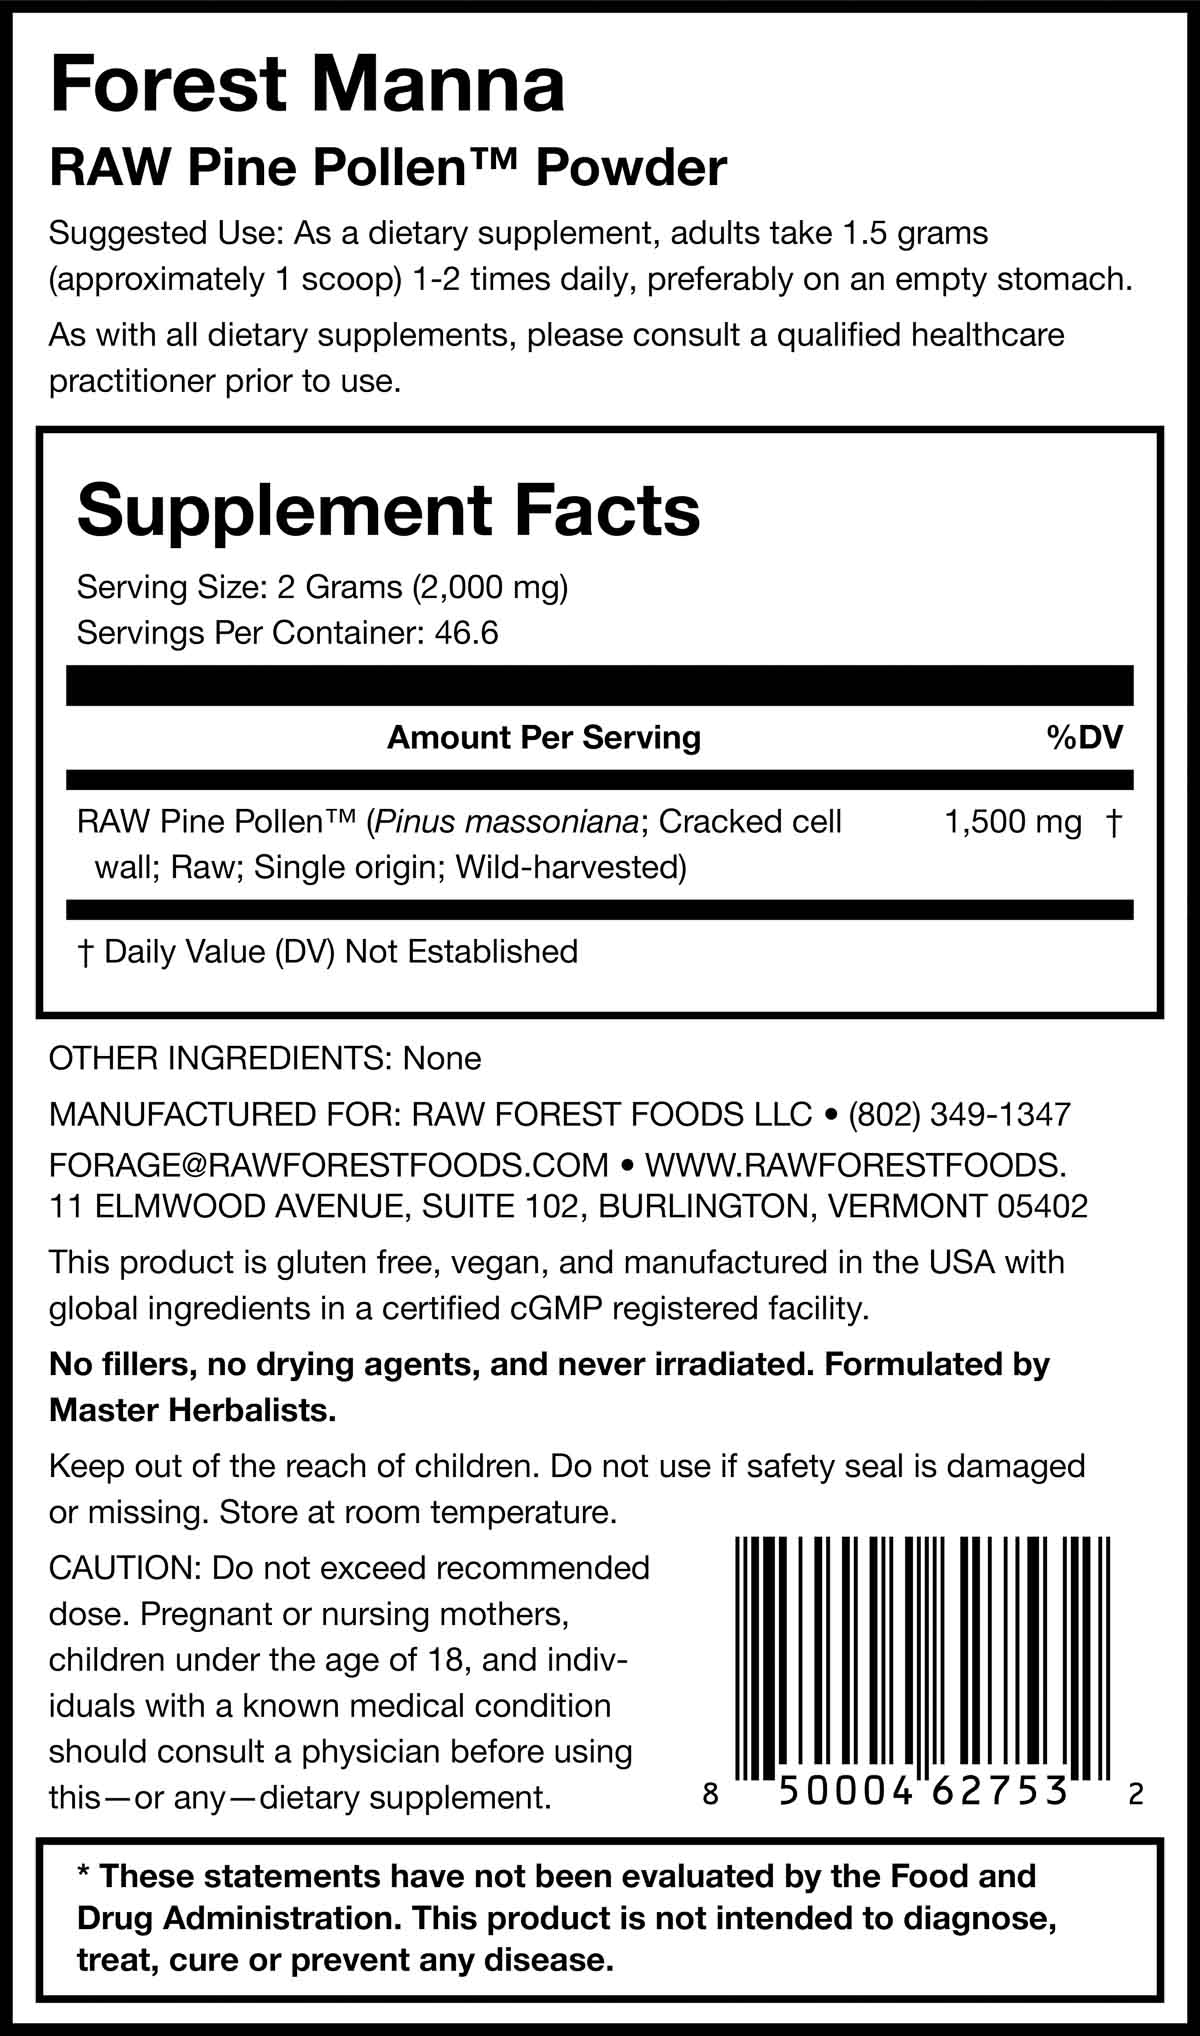 Forest Manna RAW Pine Pollen Powder 70 Grams Supplement Facts Panel